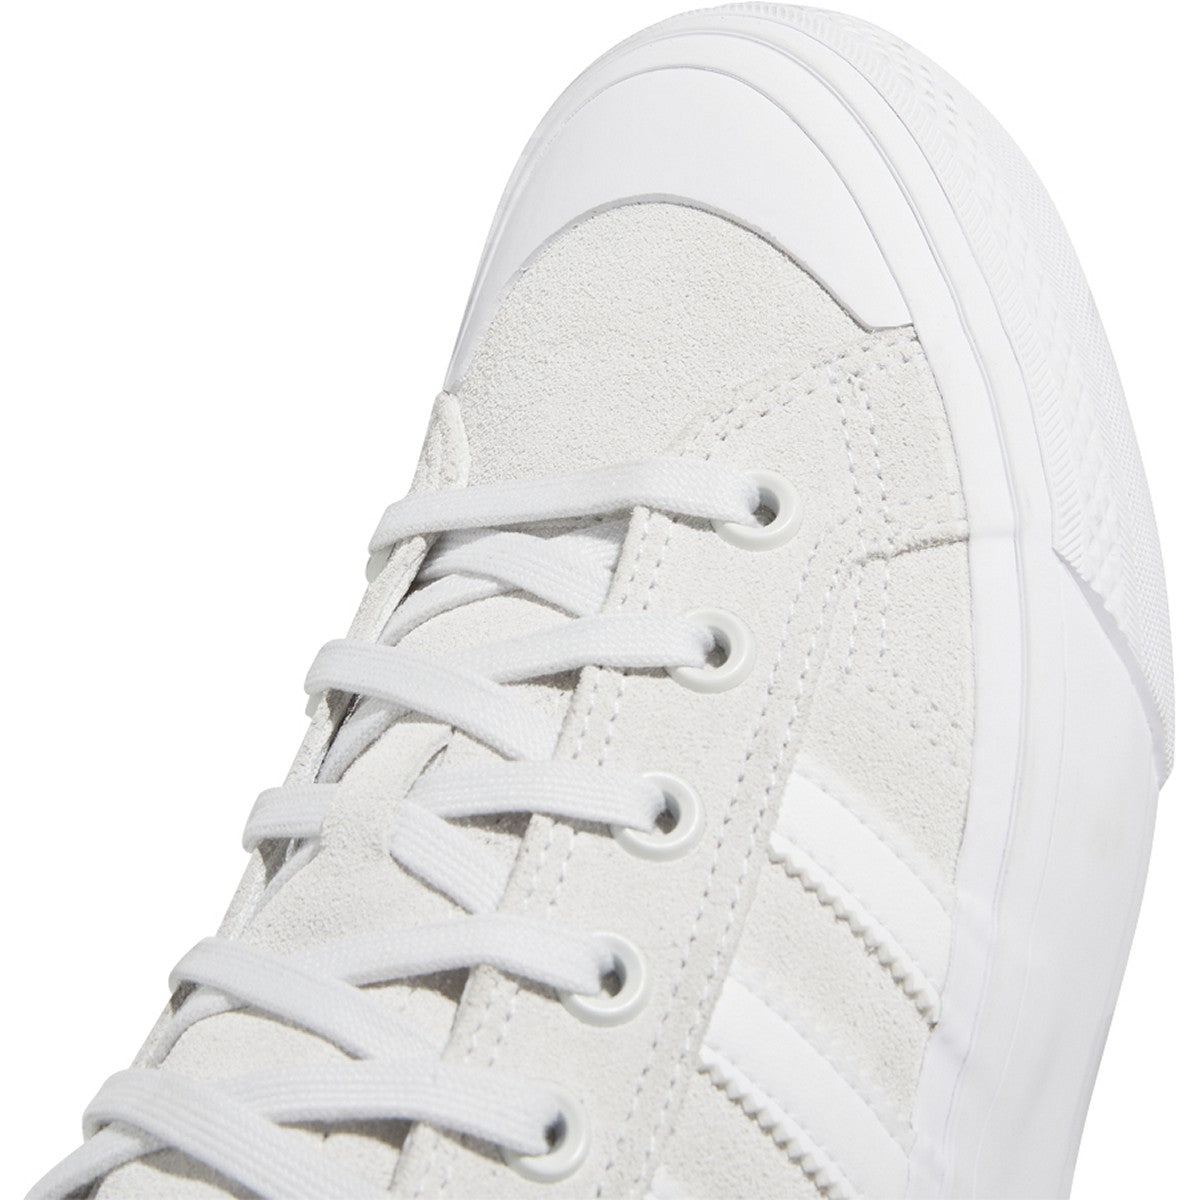 Crystal White Nizza Low ADV Adidas Skateboarding Shoe Detail